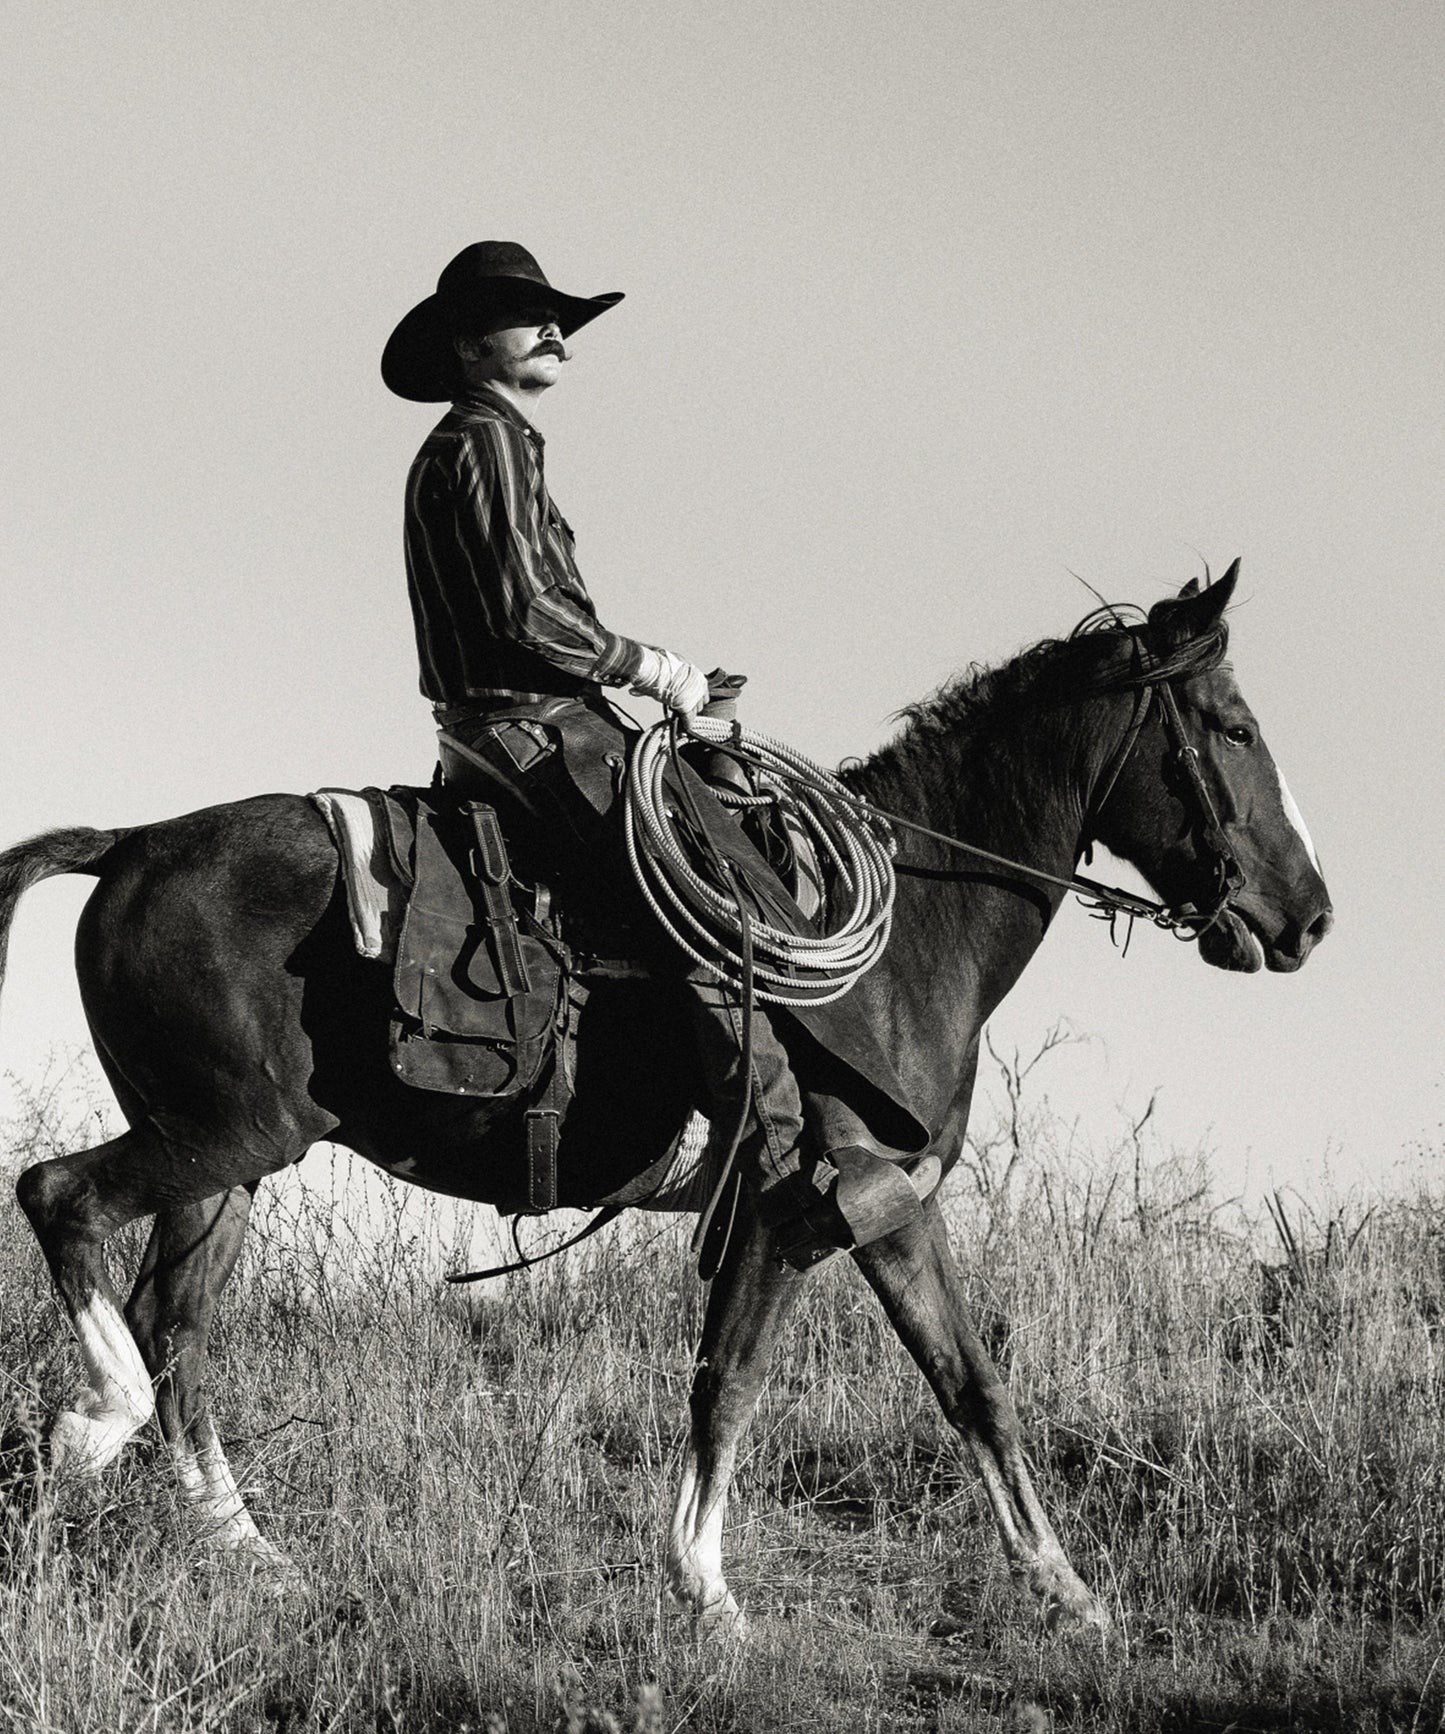 The Cowboy Collection #5/20 by Ben Christensen